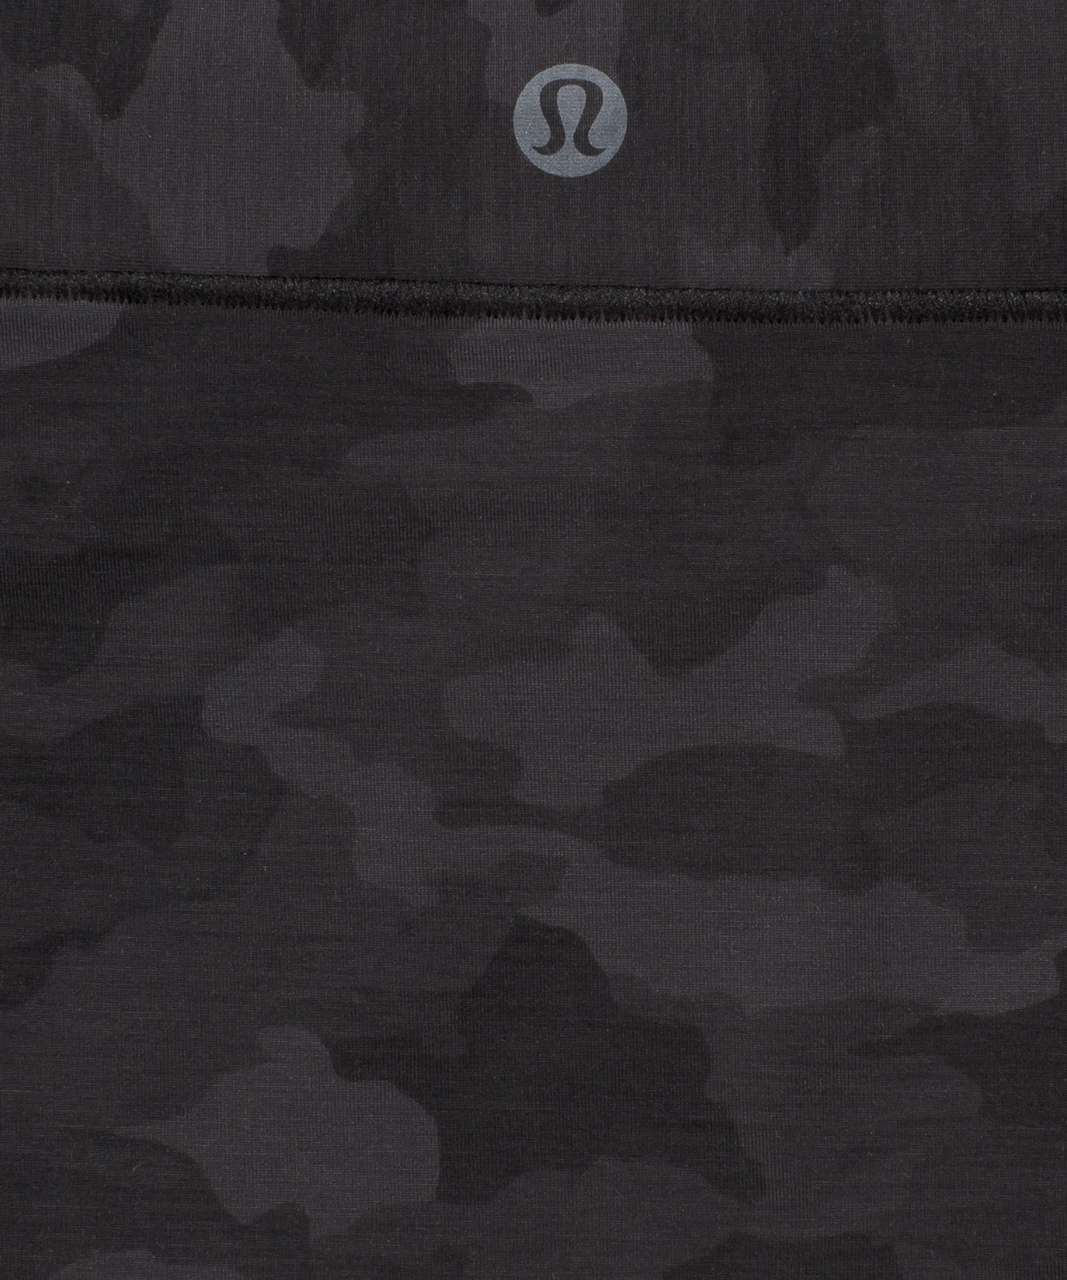 Lululemon UnderEase Mid-Rise Boyshort Underwear 3 Pack - Black / Dew Pink / Intertwined Camo Deep Coal Multi